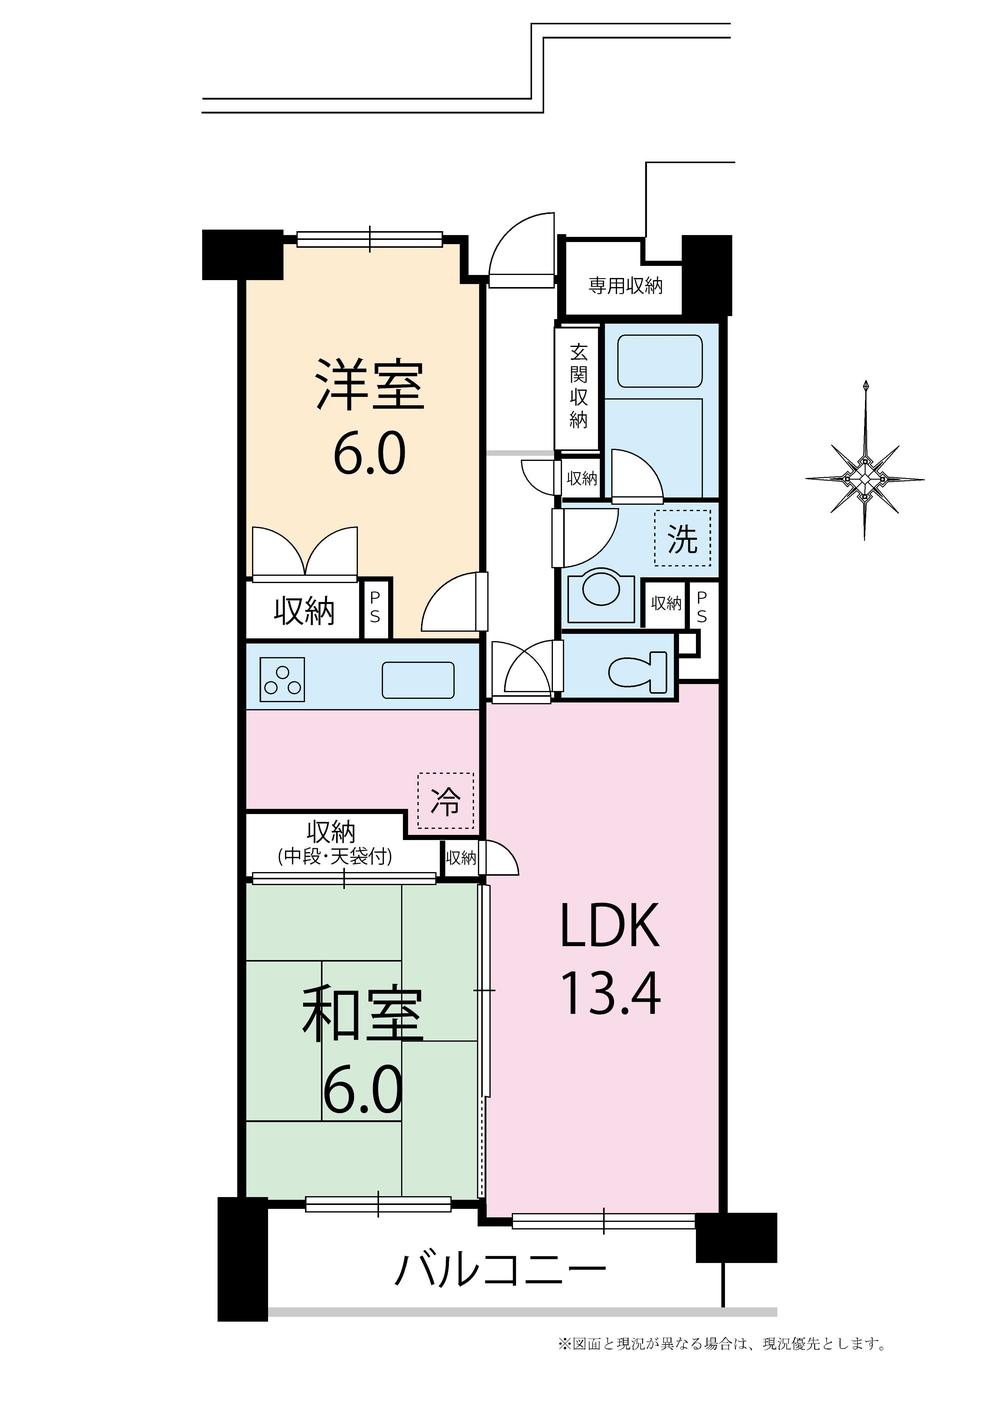 Floor plan. 2LDK, Price 20.5 million yen, Footprint 56.7 sq m , Balcony area 7.23 sq m